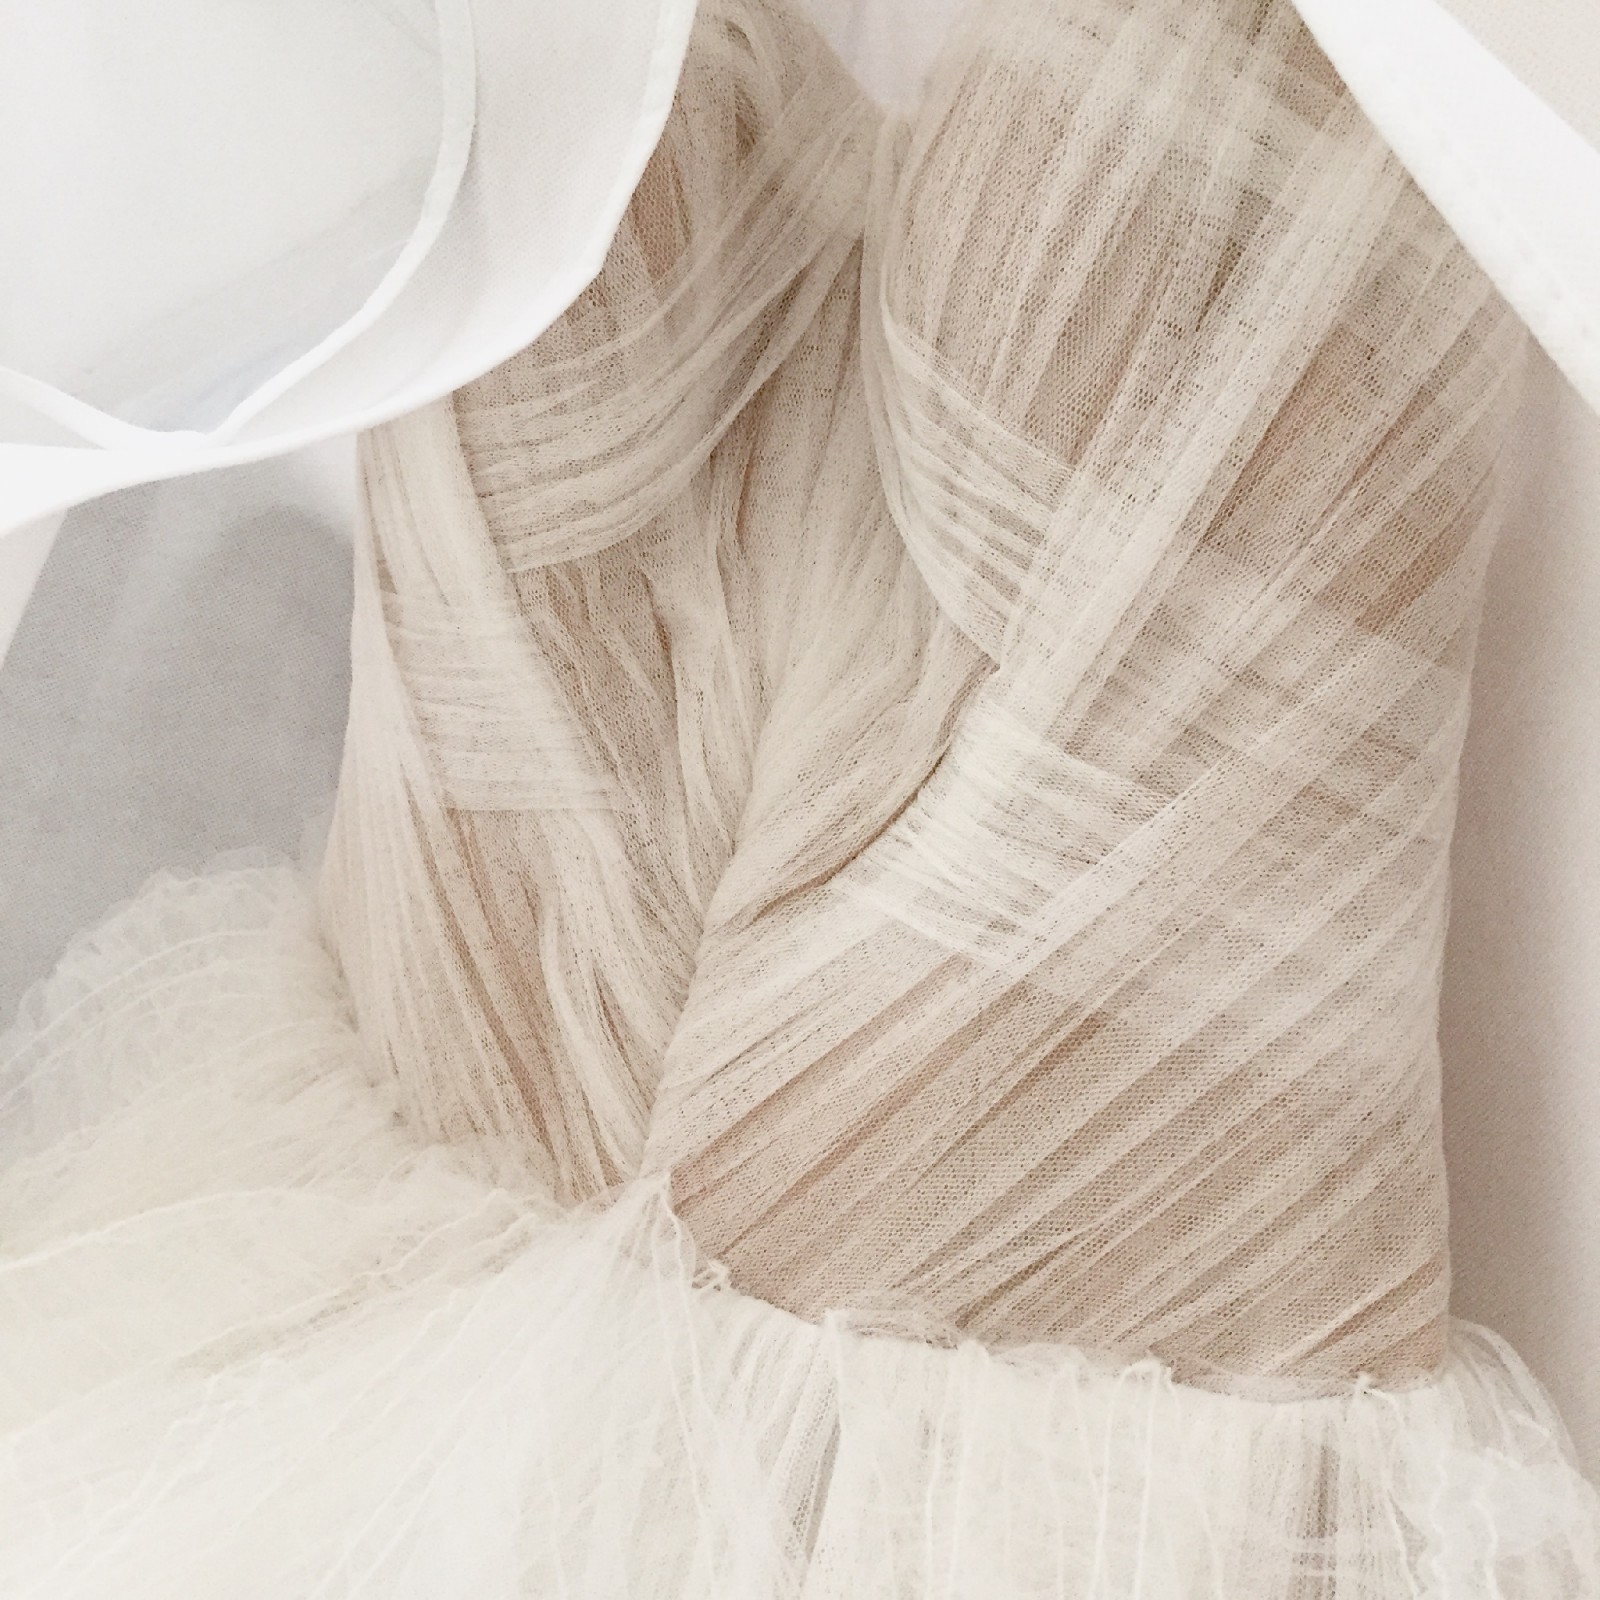 Vera Wang Octavia Preloved Wedding Dress Save 75% - Stillwhite